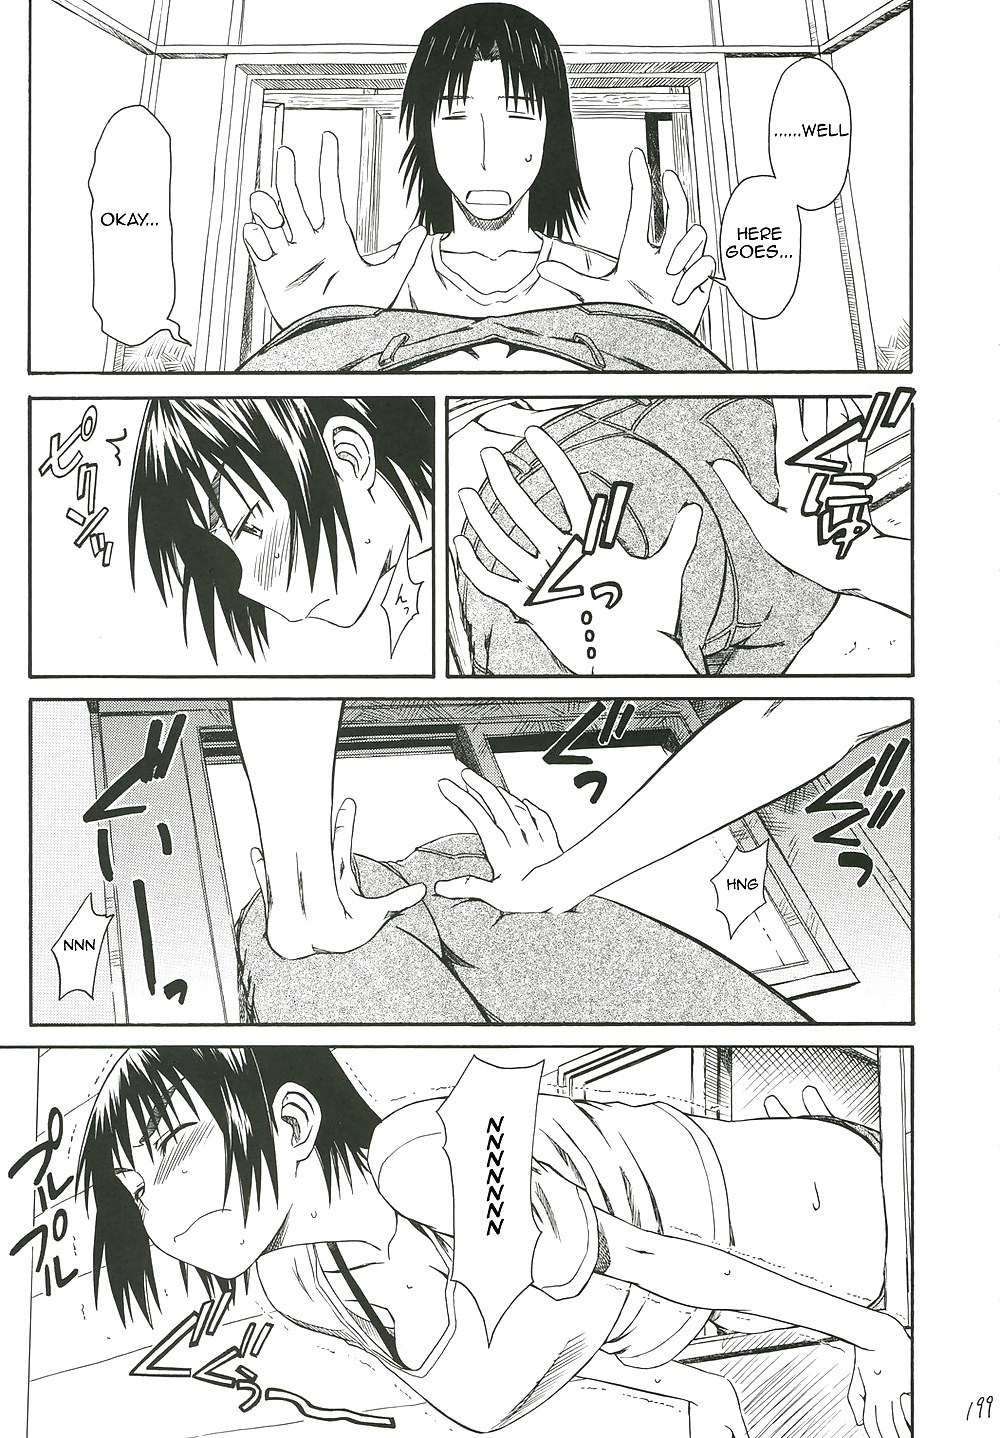 (Manga) Window girl #28805704